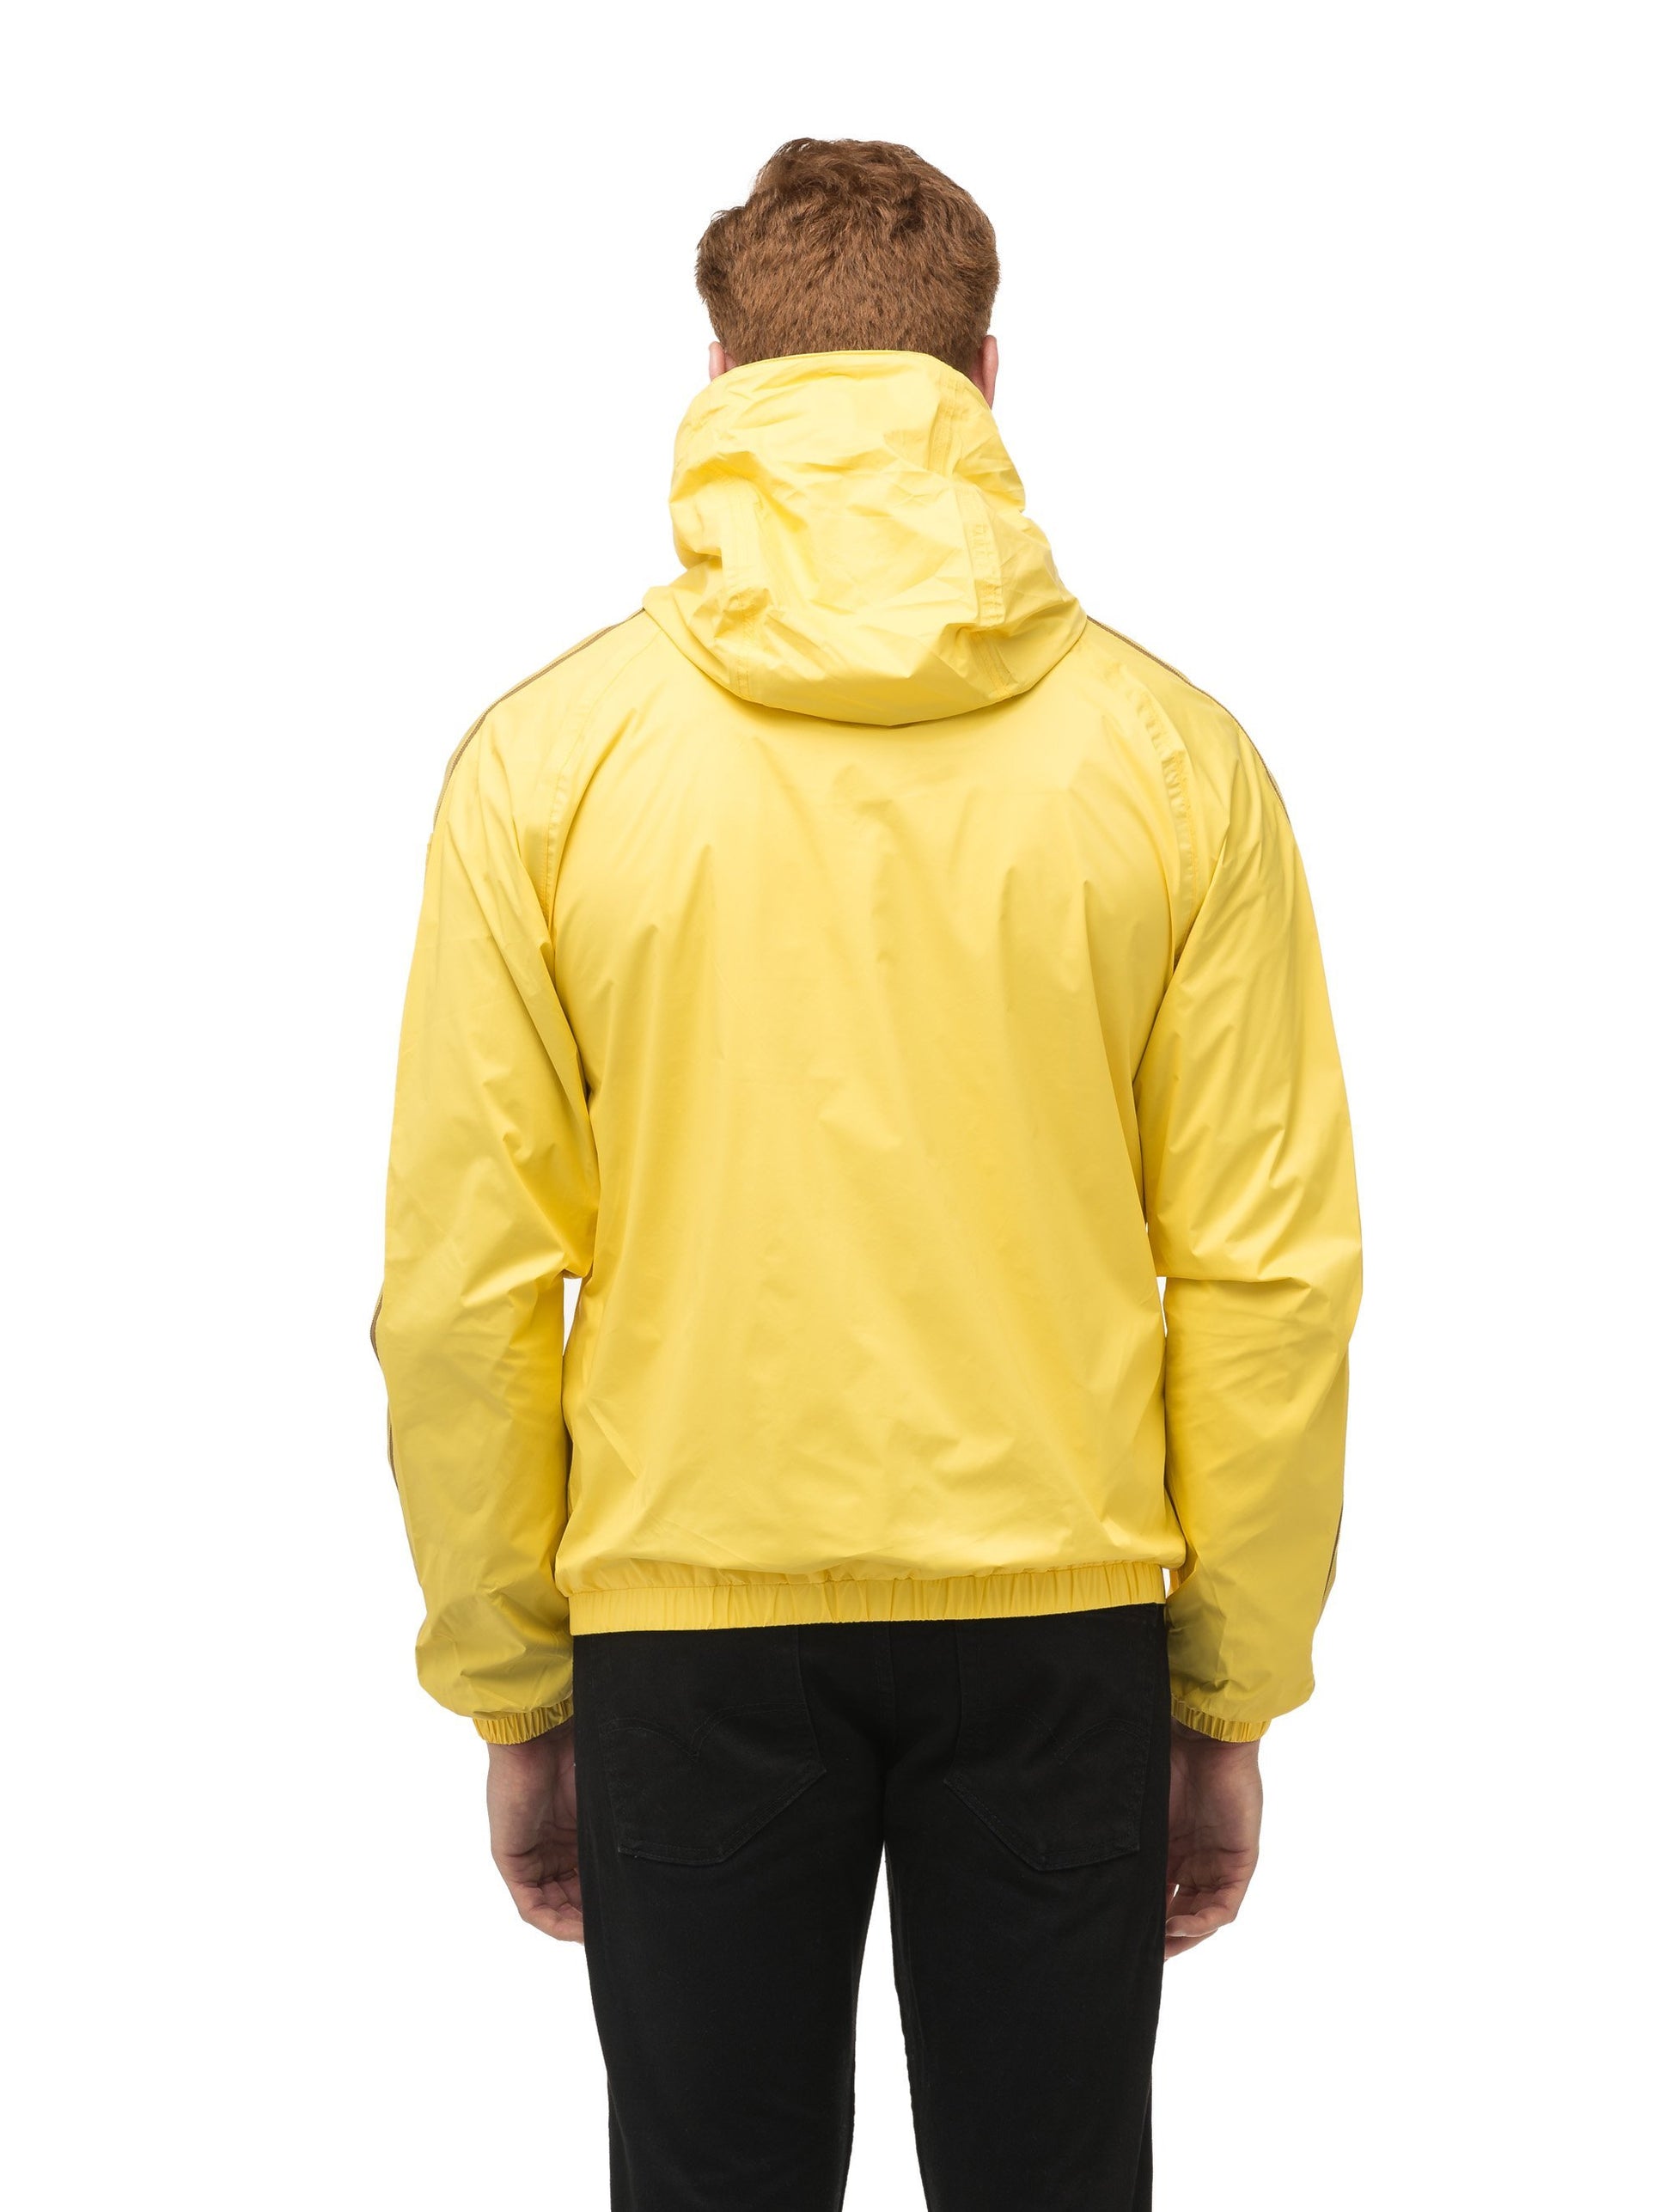 Men's waist length windbreaker with hood in Citron